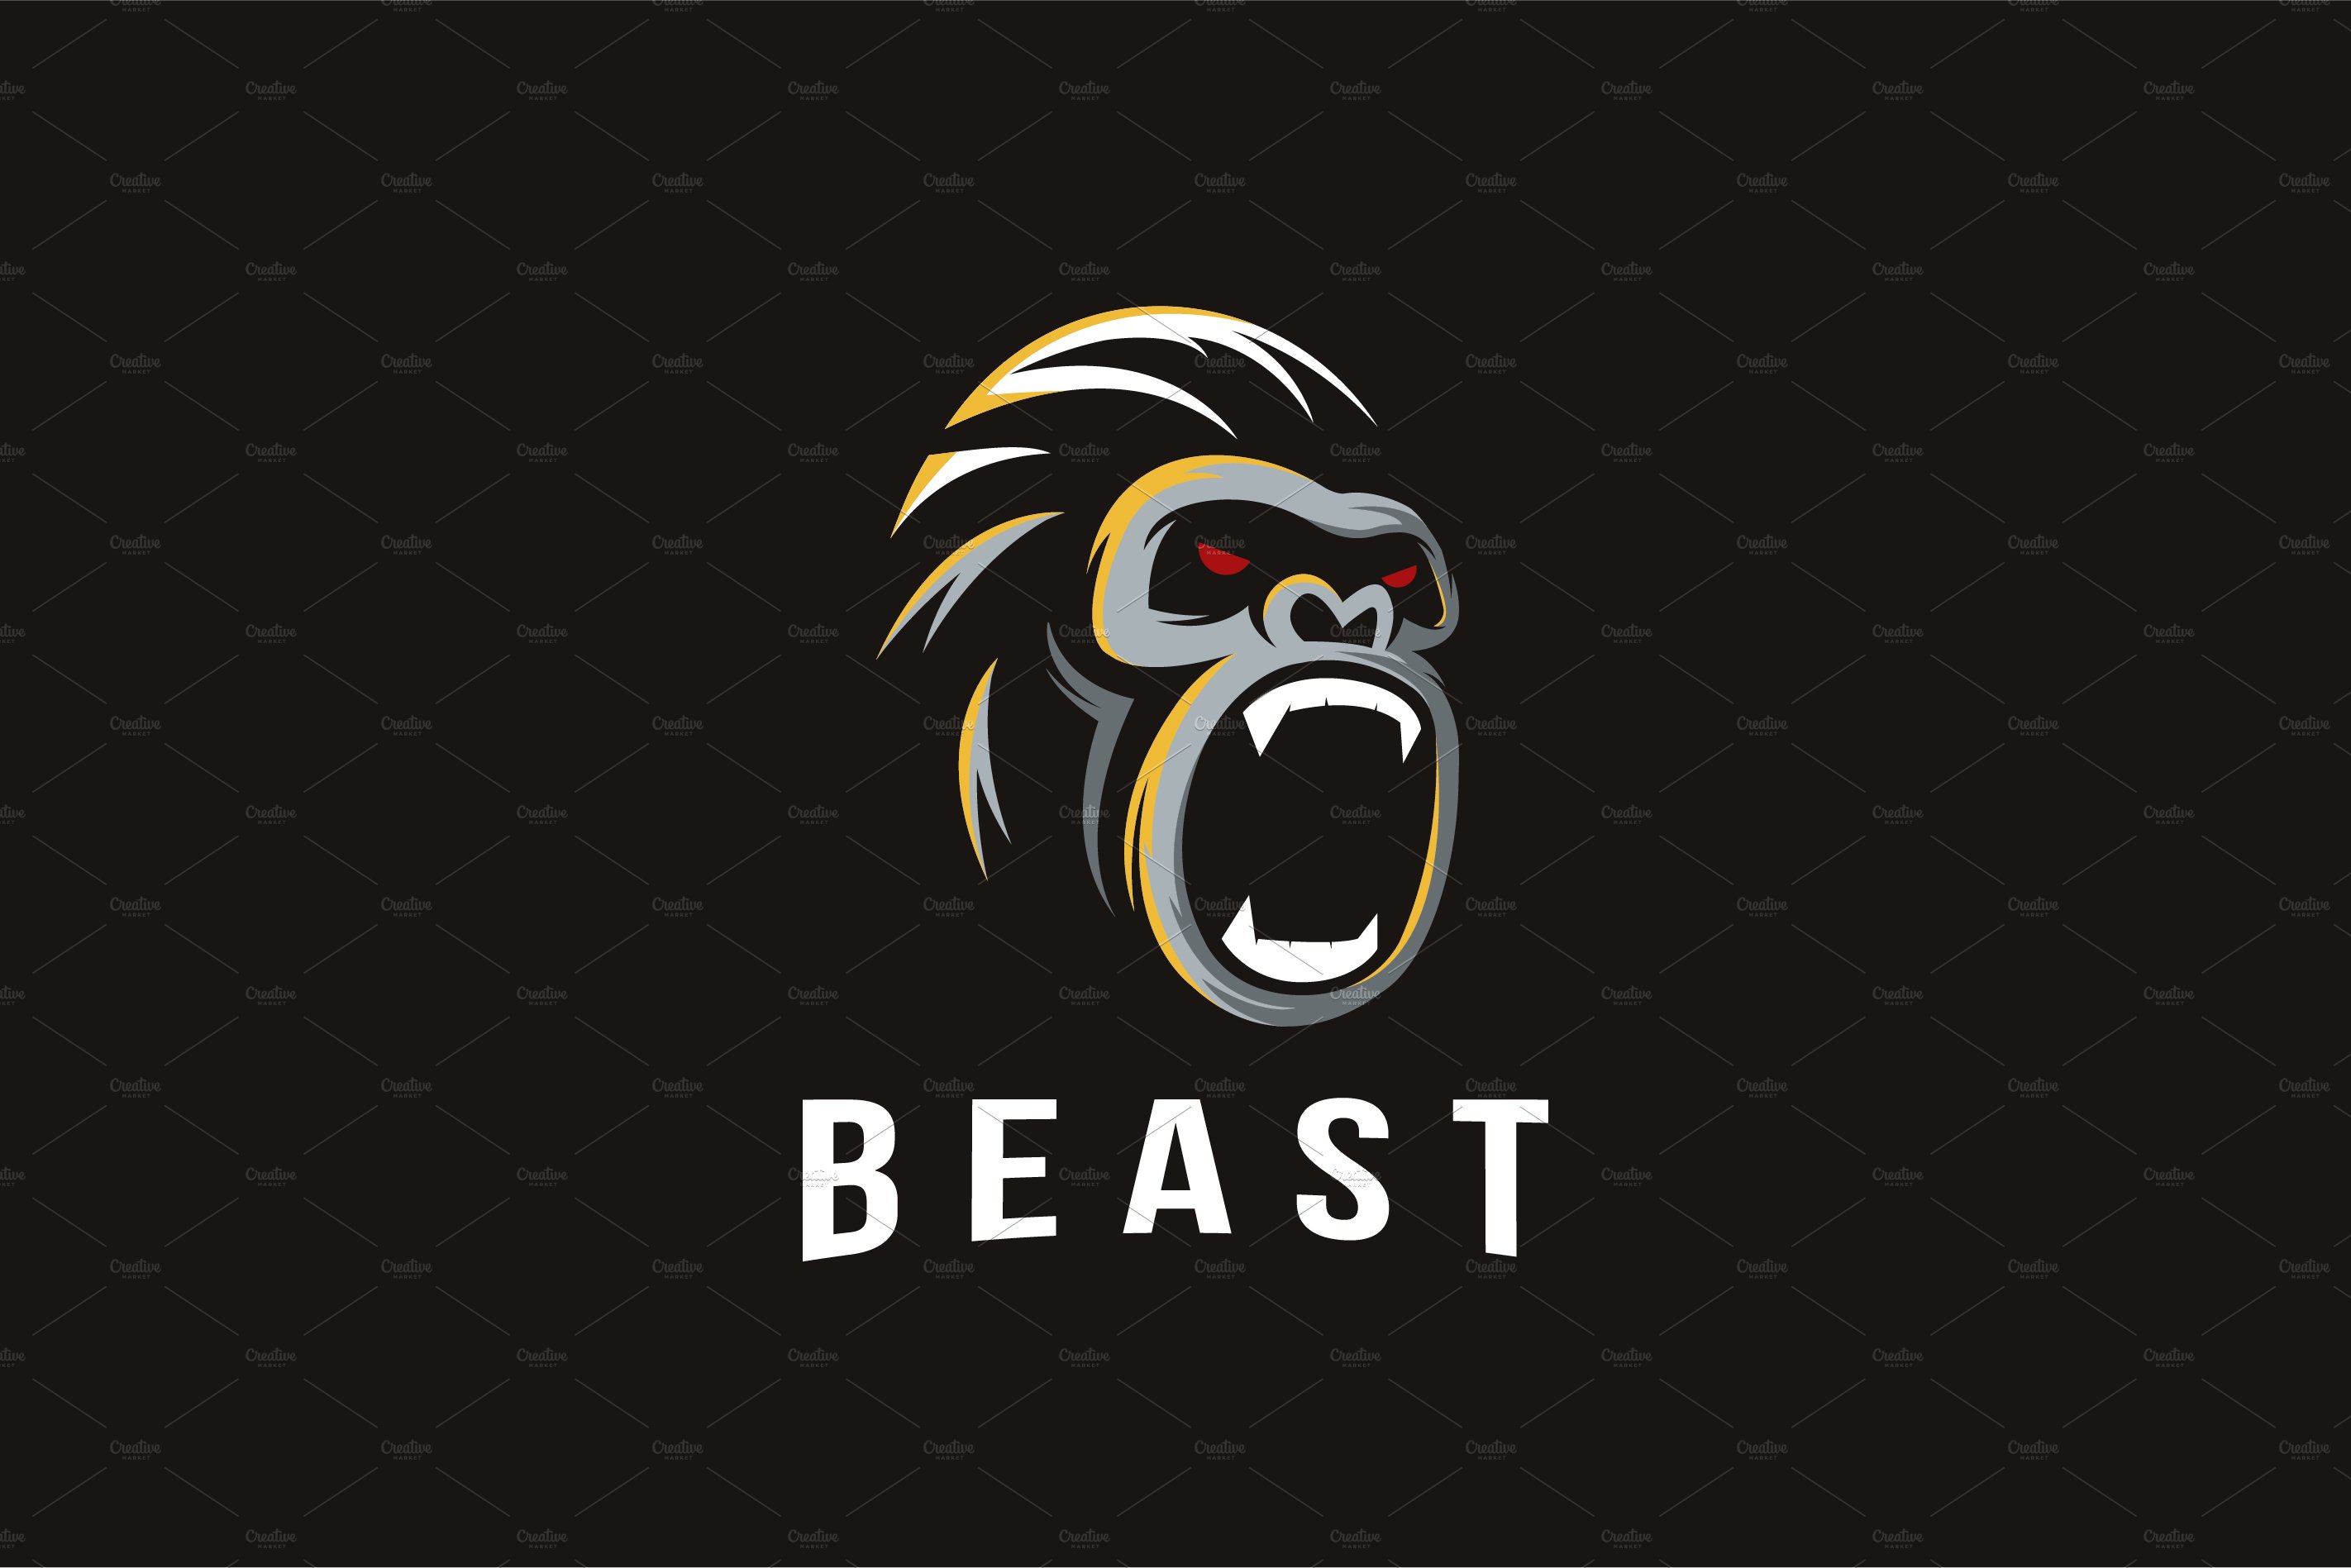 Simple powerful gorilla head logo cover image.